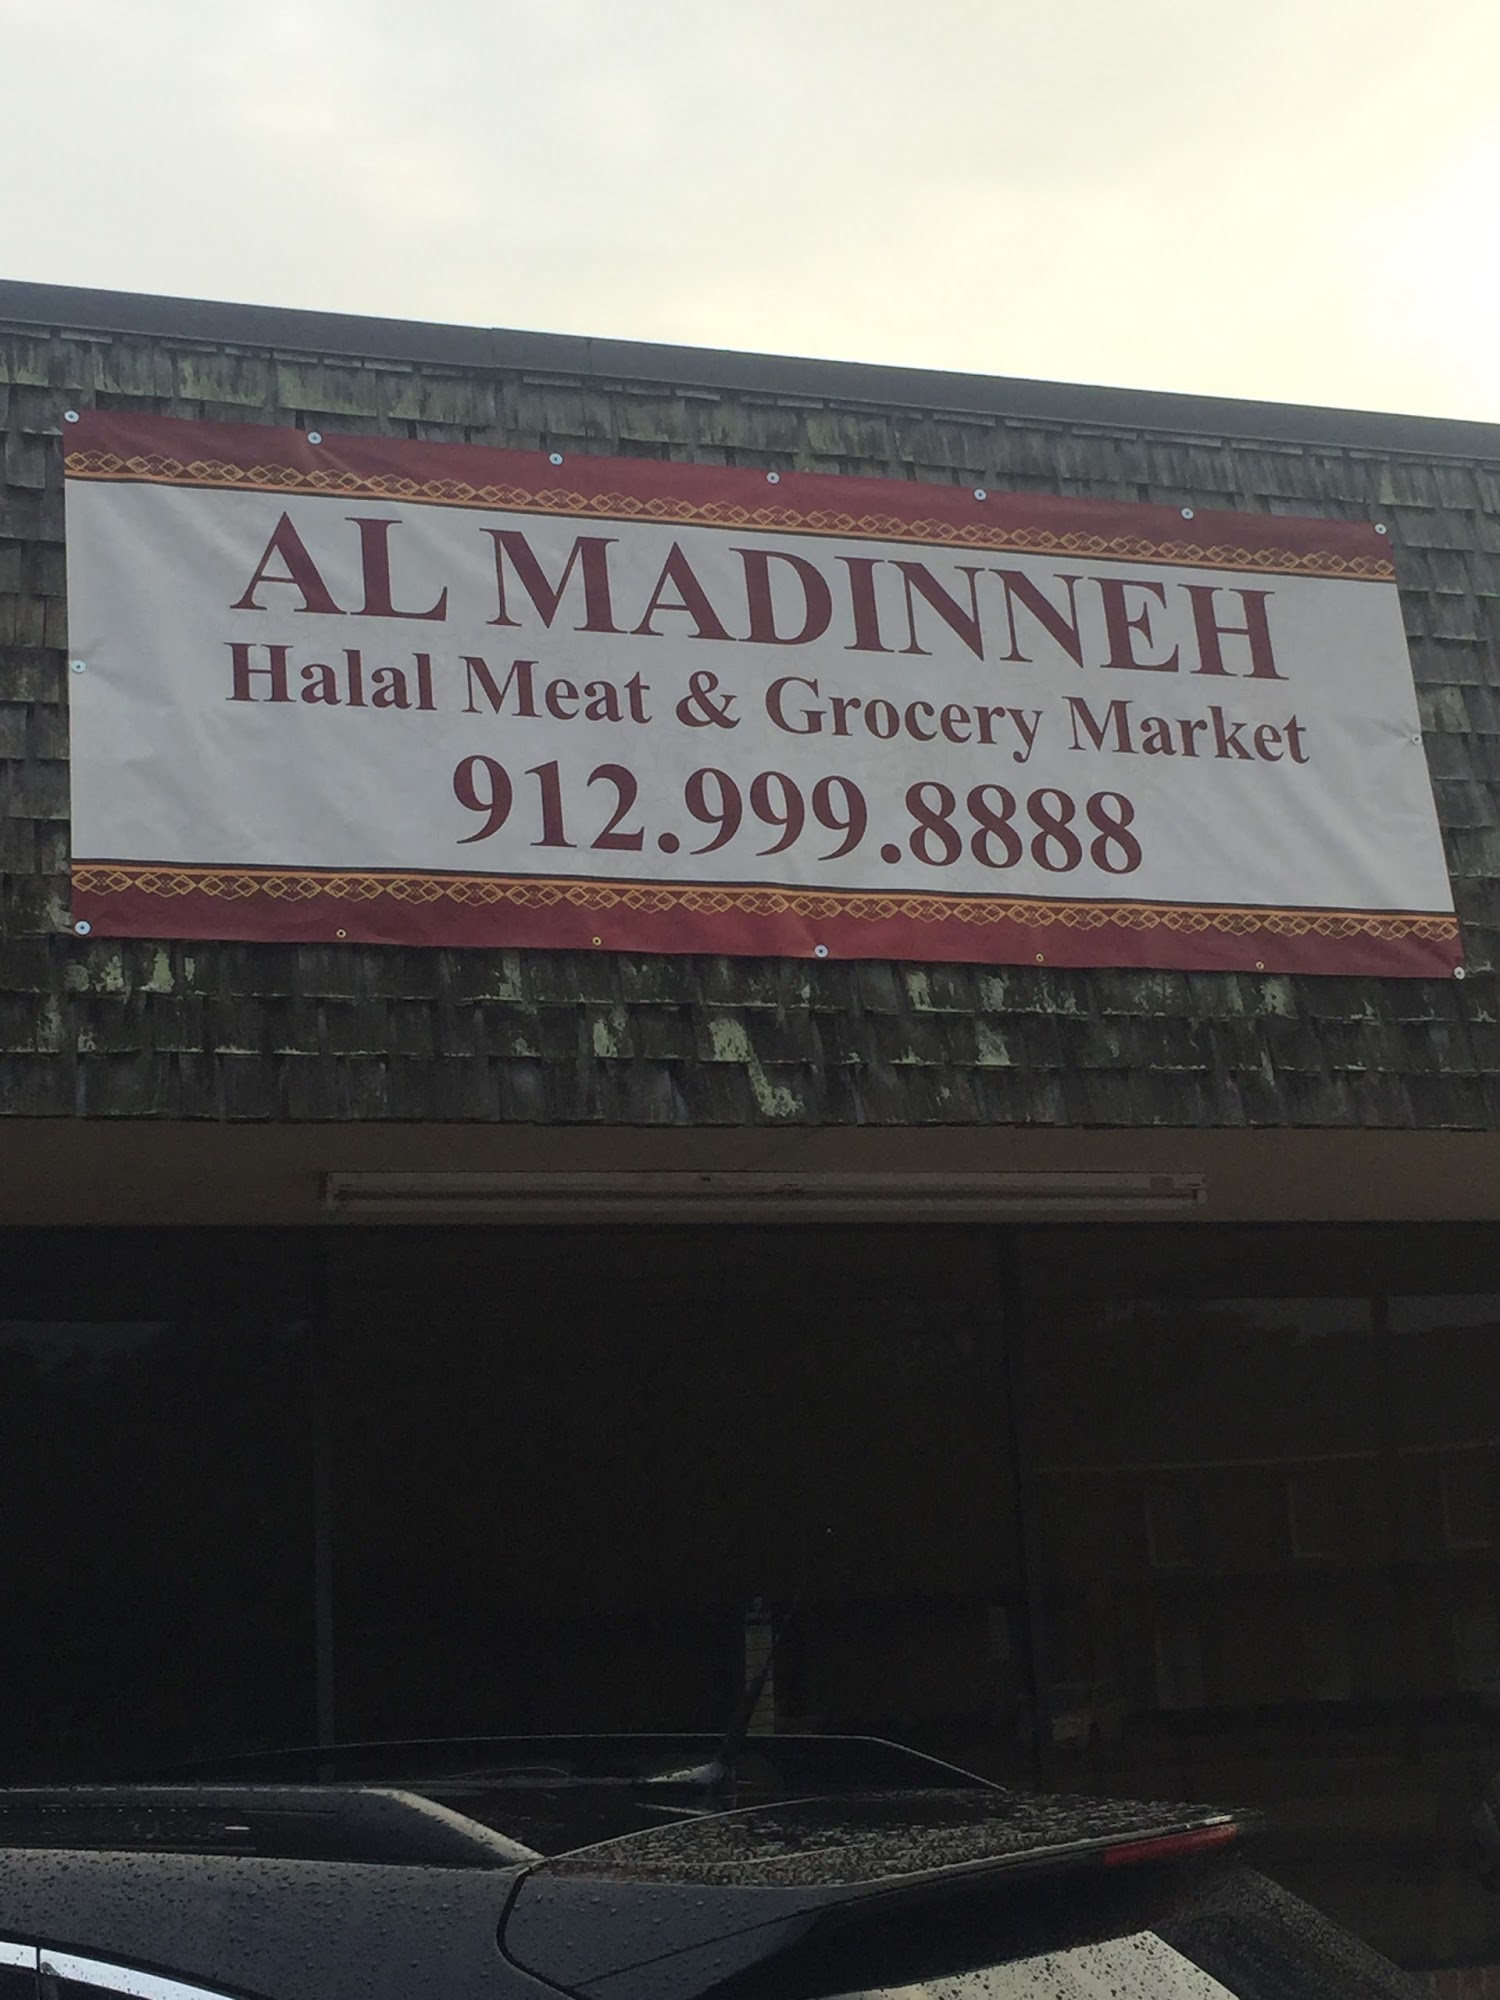 Al Madinneh Halal Meat & Grocery